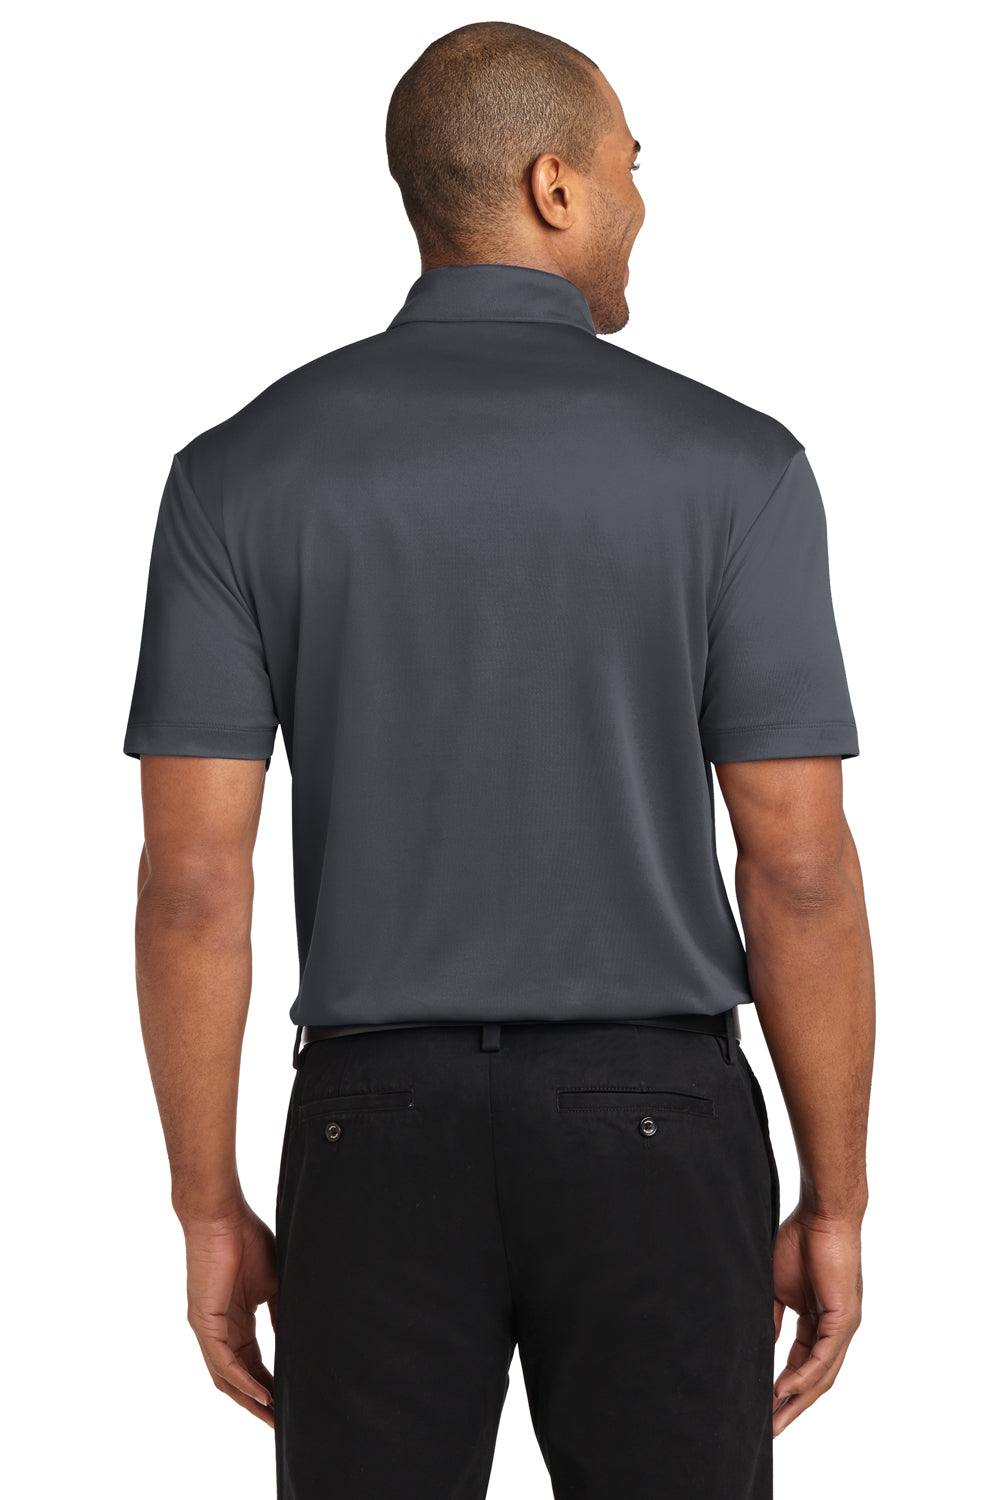 Port Authority K540P Mens Silk Touch Performance Moisture Wicking Short Sleeve Polo Shirt w/ Pocket Steel Grey Back